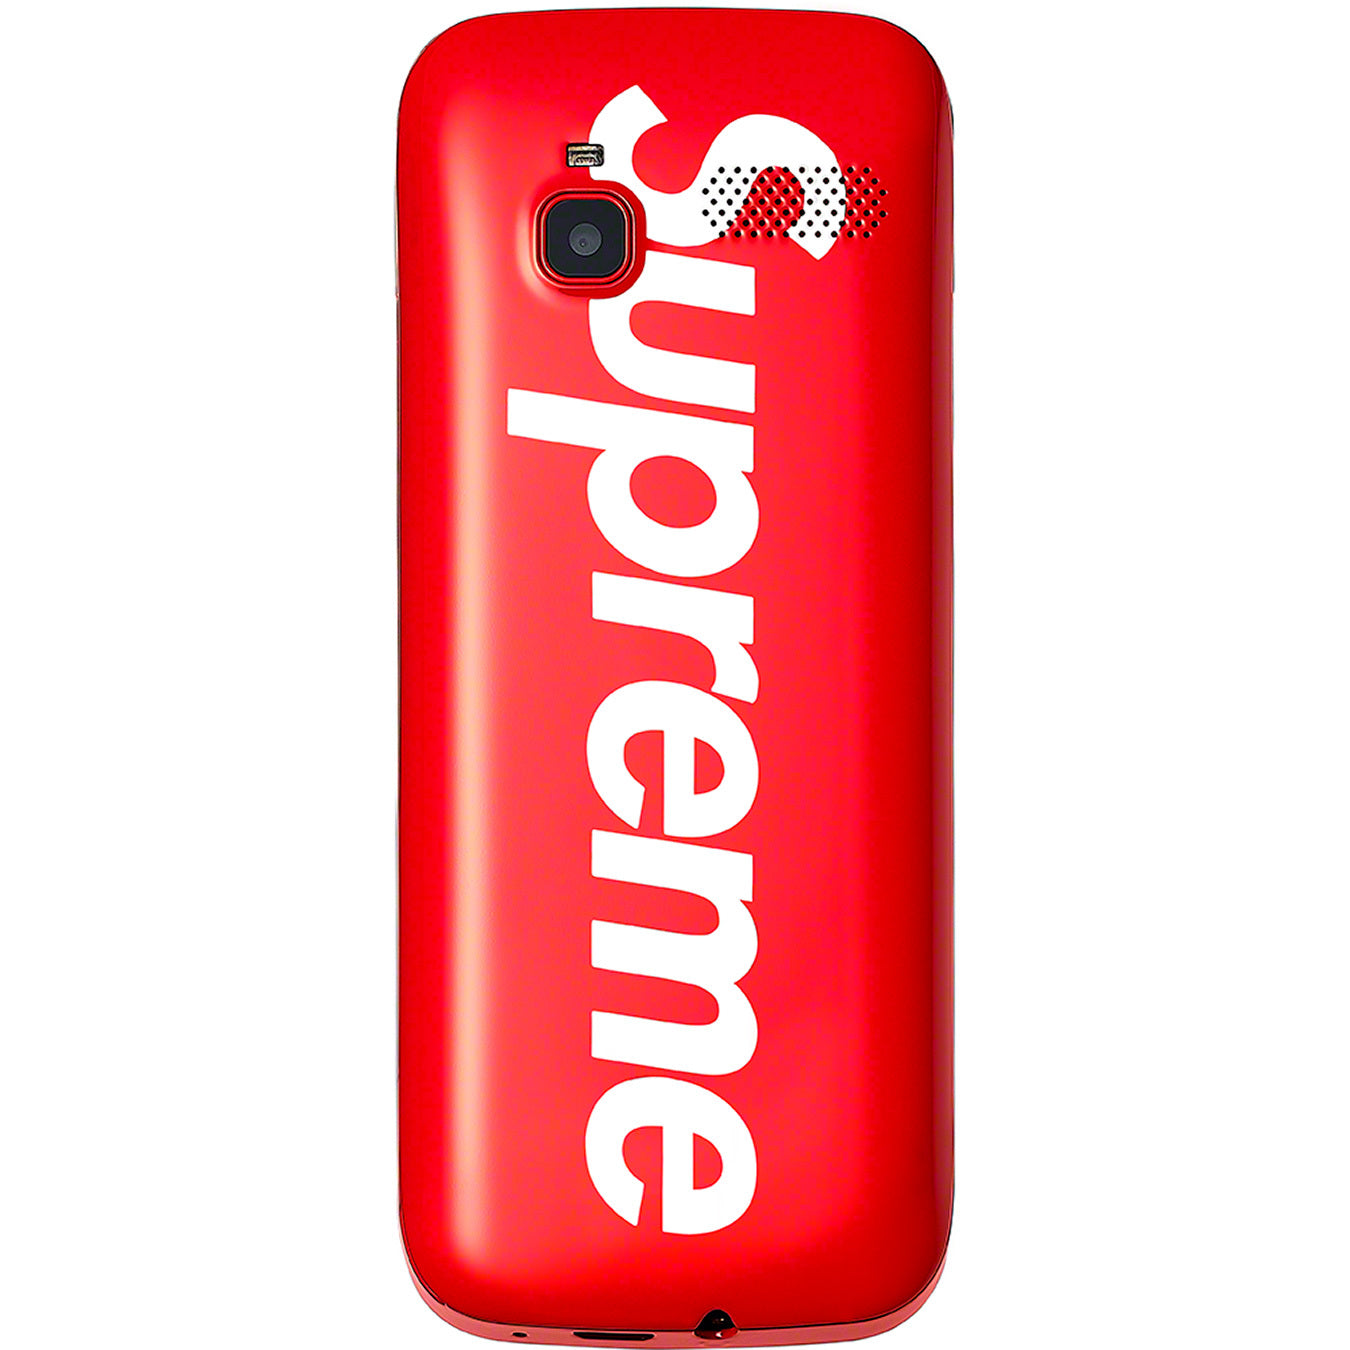 Supreme Blu Burner Phone - Red by Supreme from £225.00